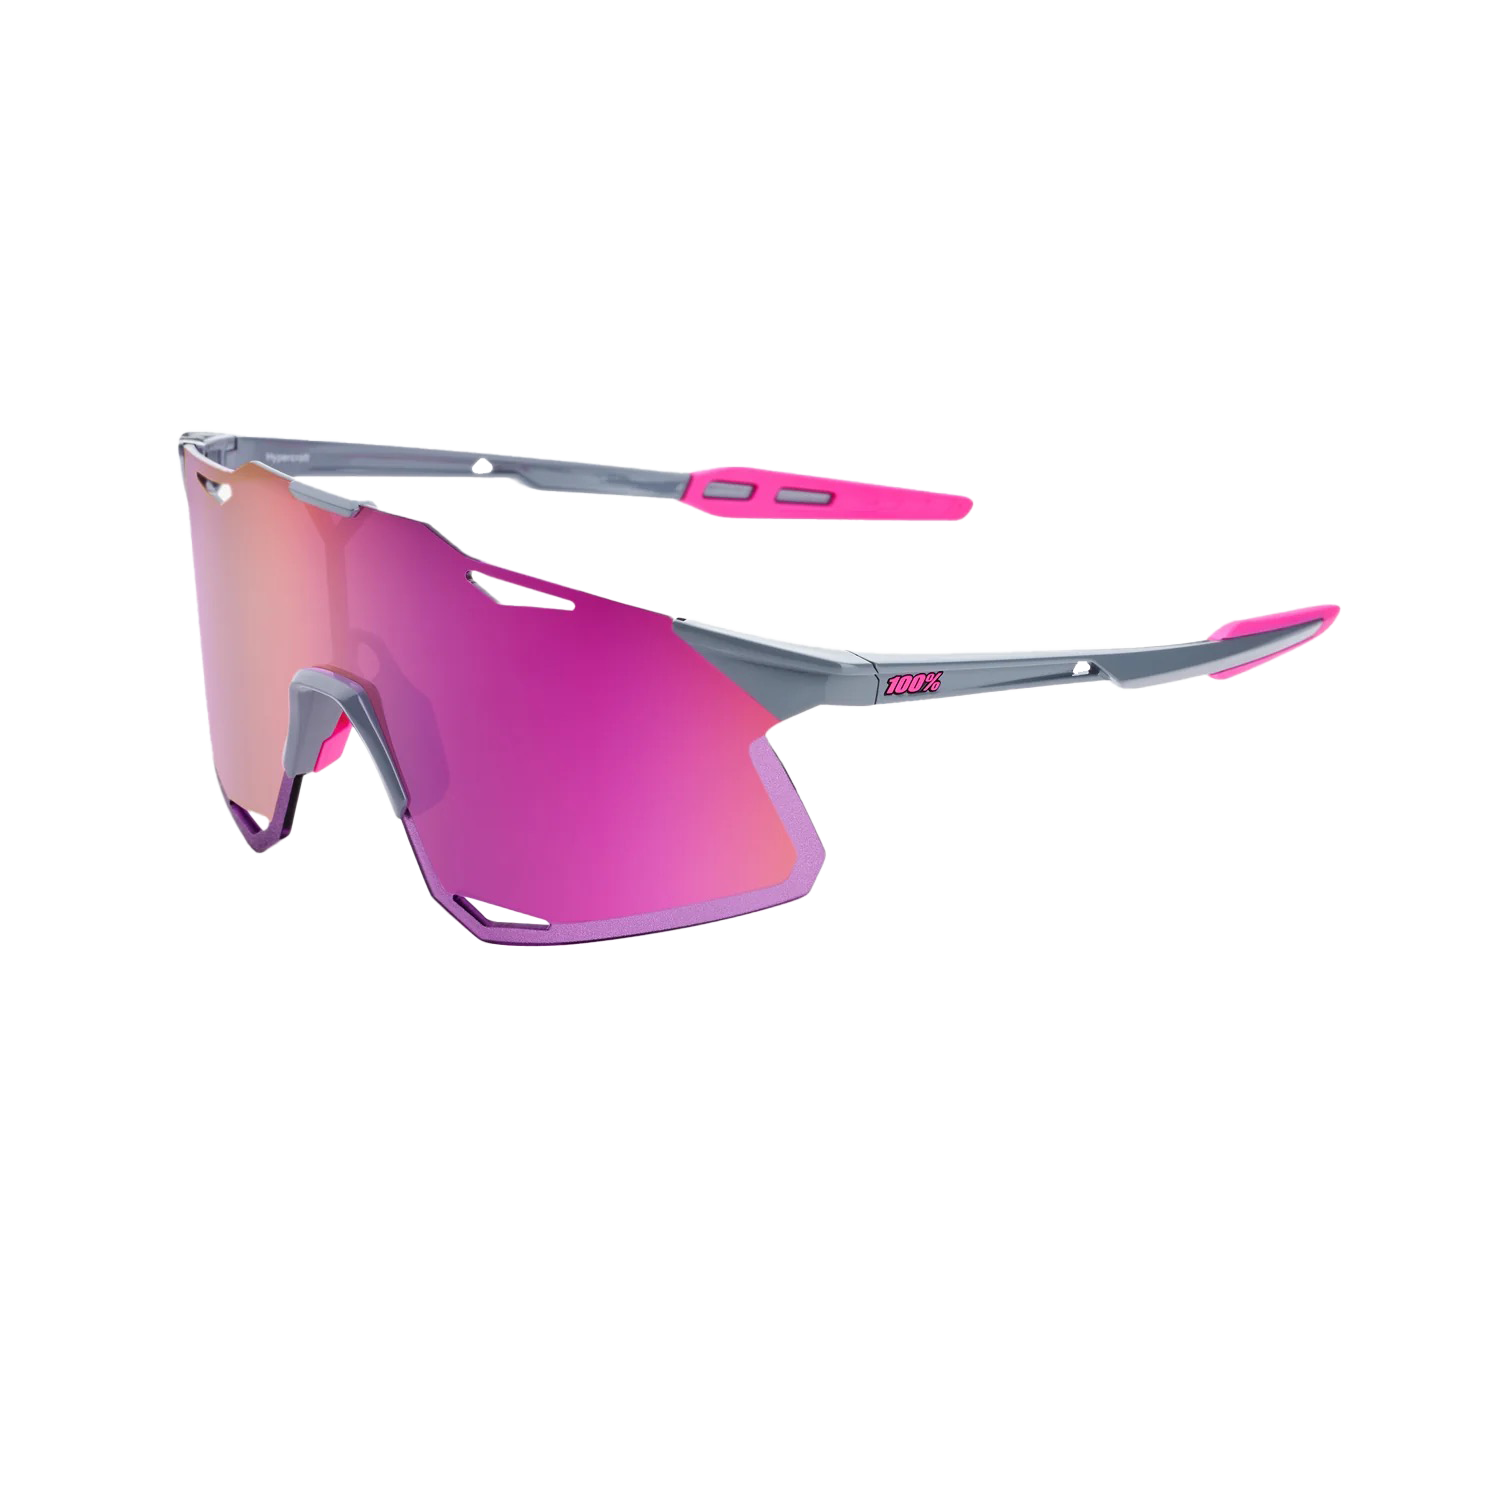 Hypercraft Sunglasses from 100% | Team Town Sports